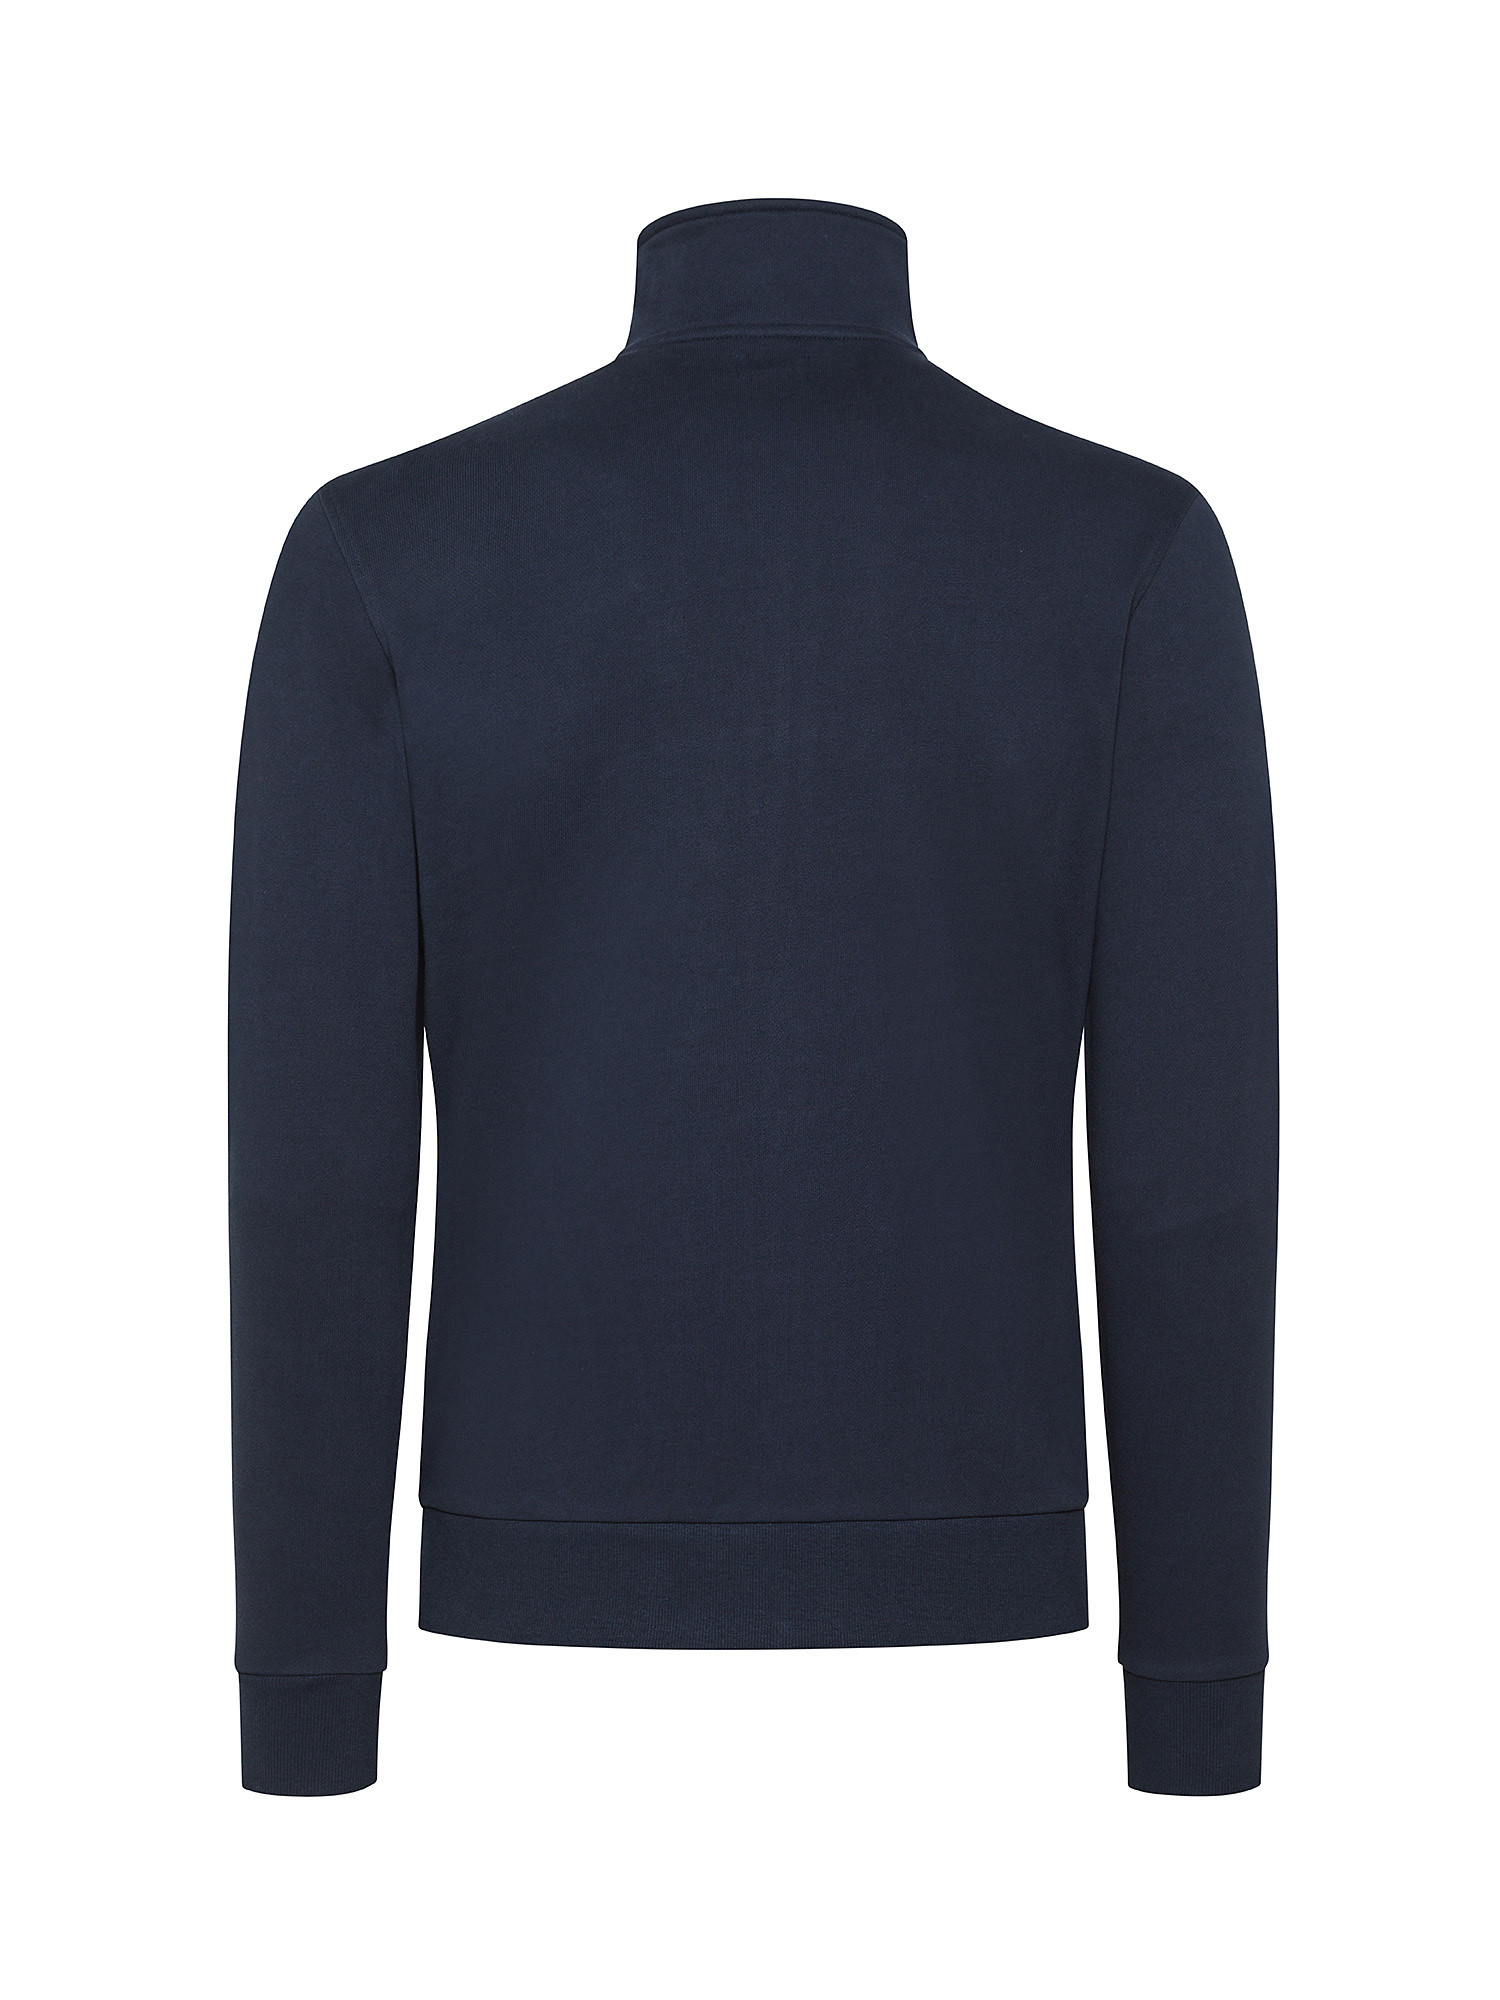 JCT - Full zip sweatshirt in pure cotton, Dark Blue, large image number 1